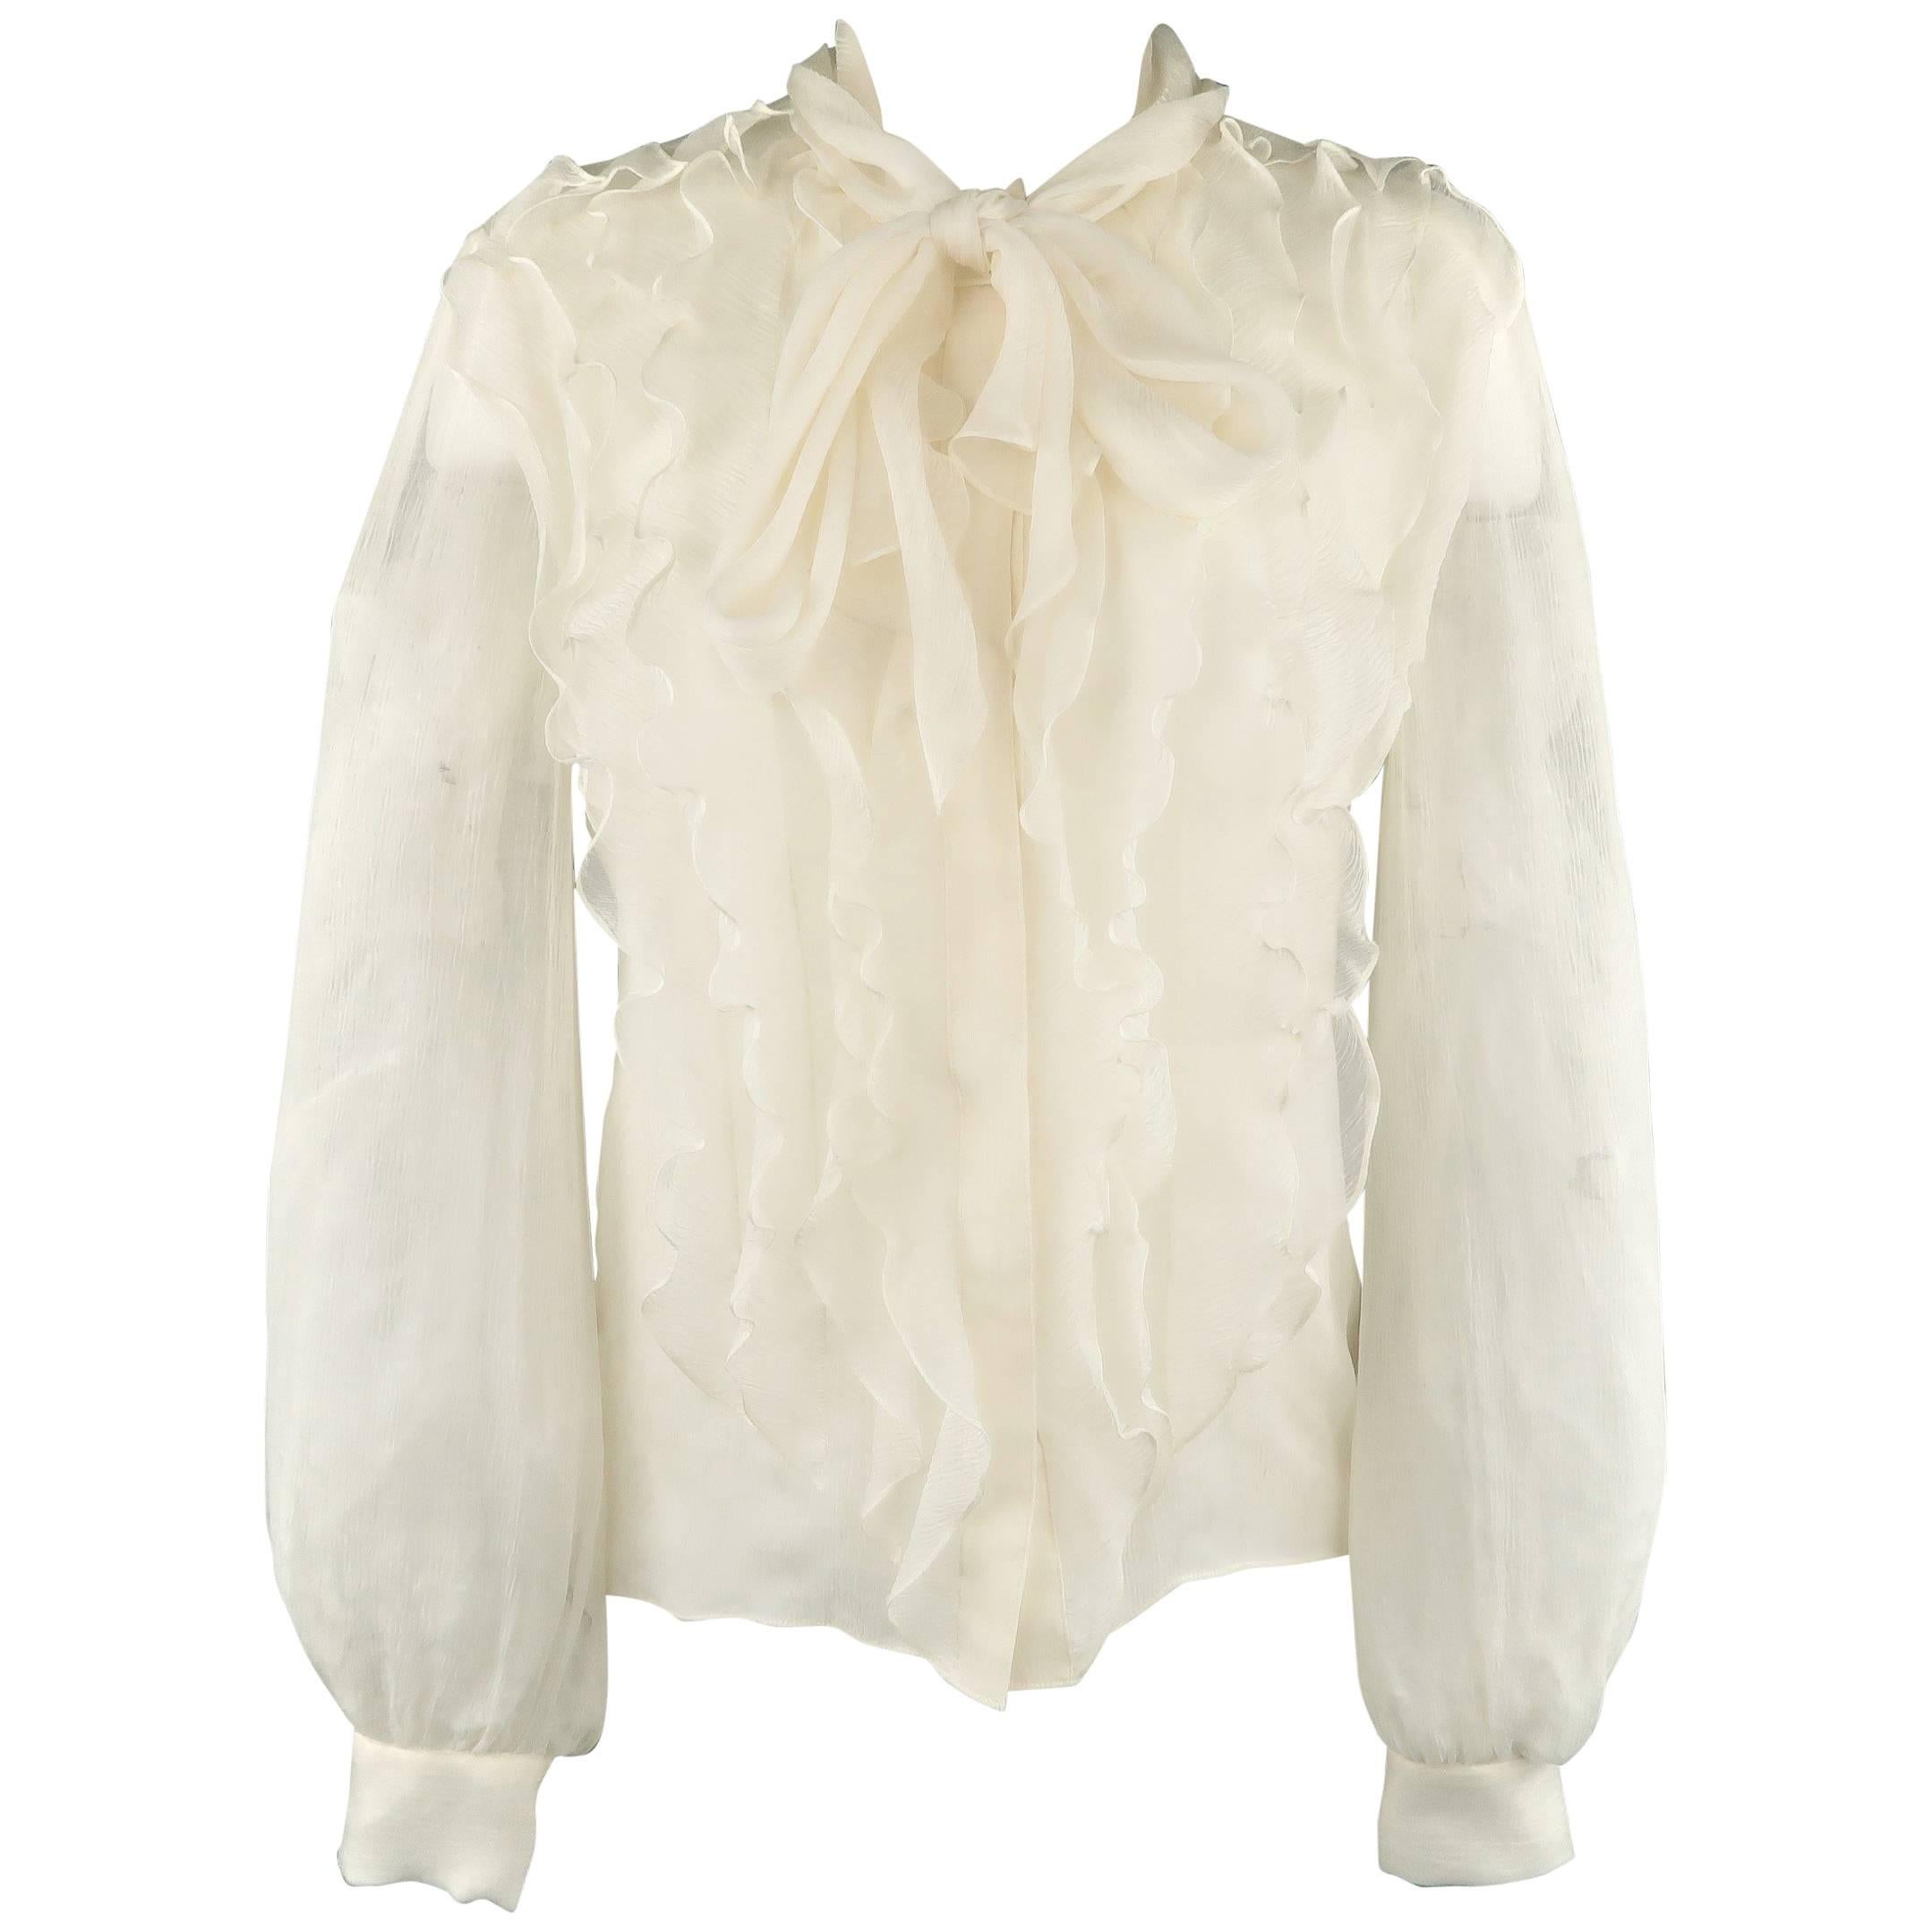 OSCAR DE LA RENTA Size 8 Cream Silk Chiffon Ruffle Tie Blouse